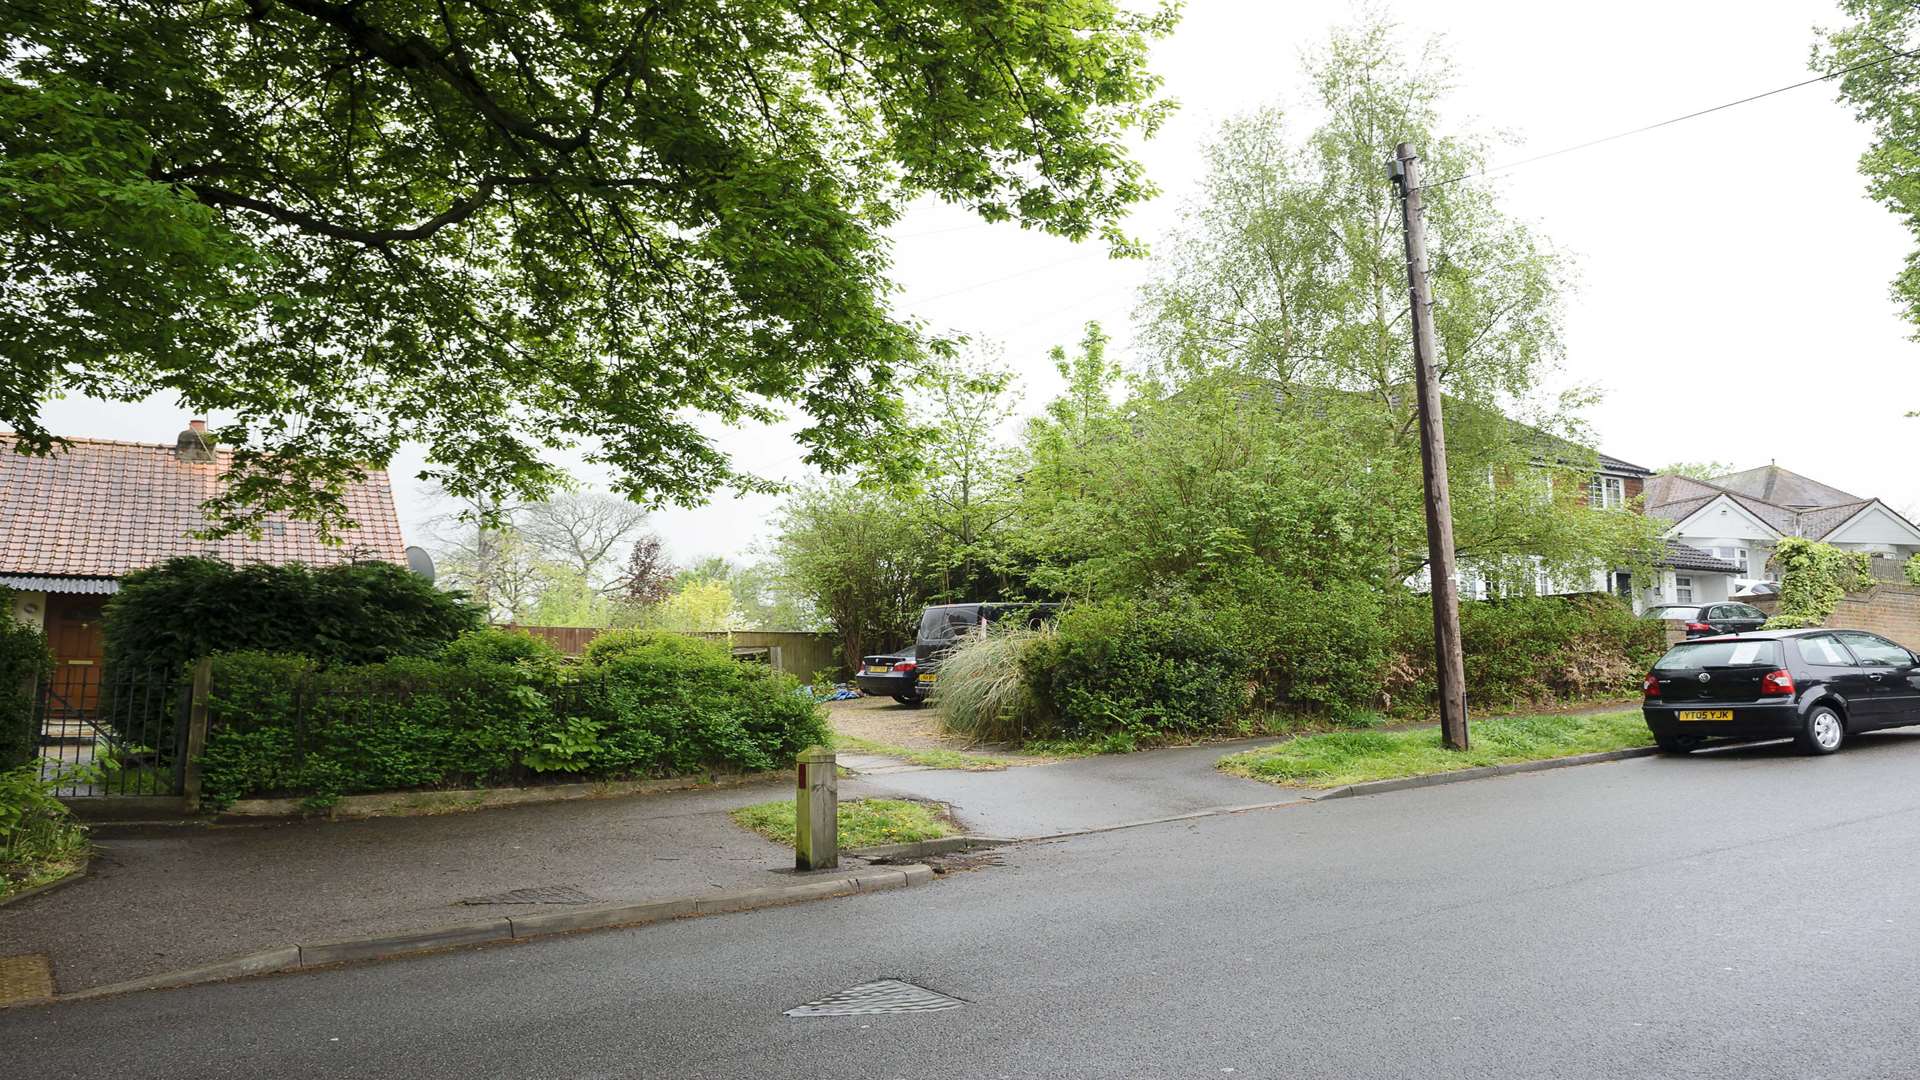 Views of the area around Summerhouse Drive, Joydens Wood, Dartford.